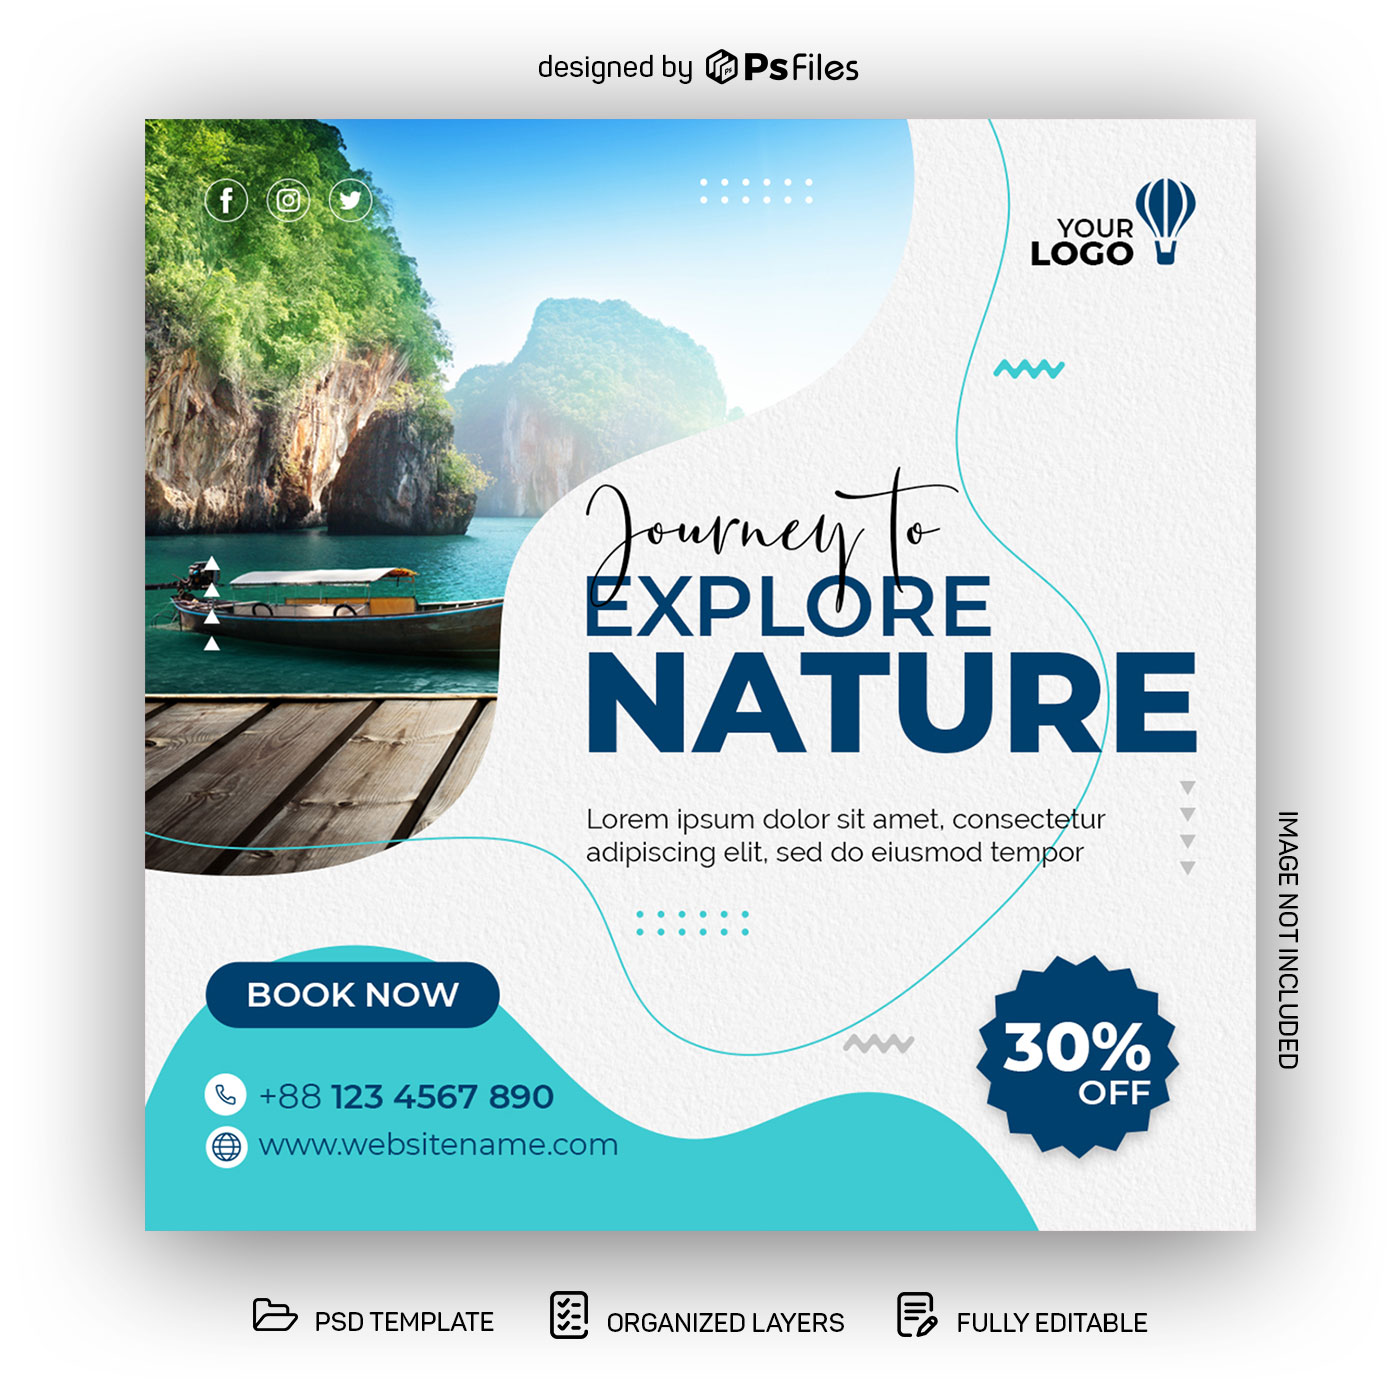 Explore Nature Travel Agency Instagram Post Design PSD Template 05